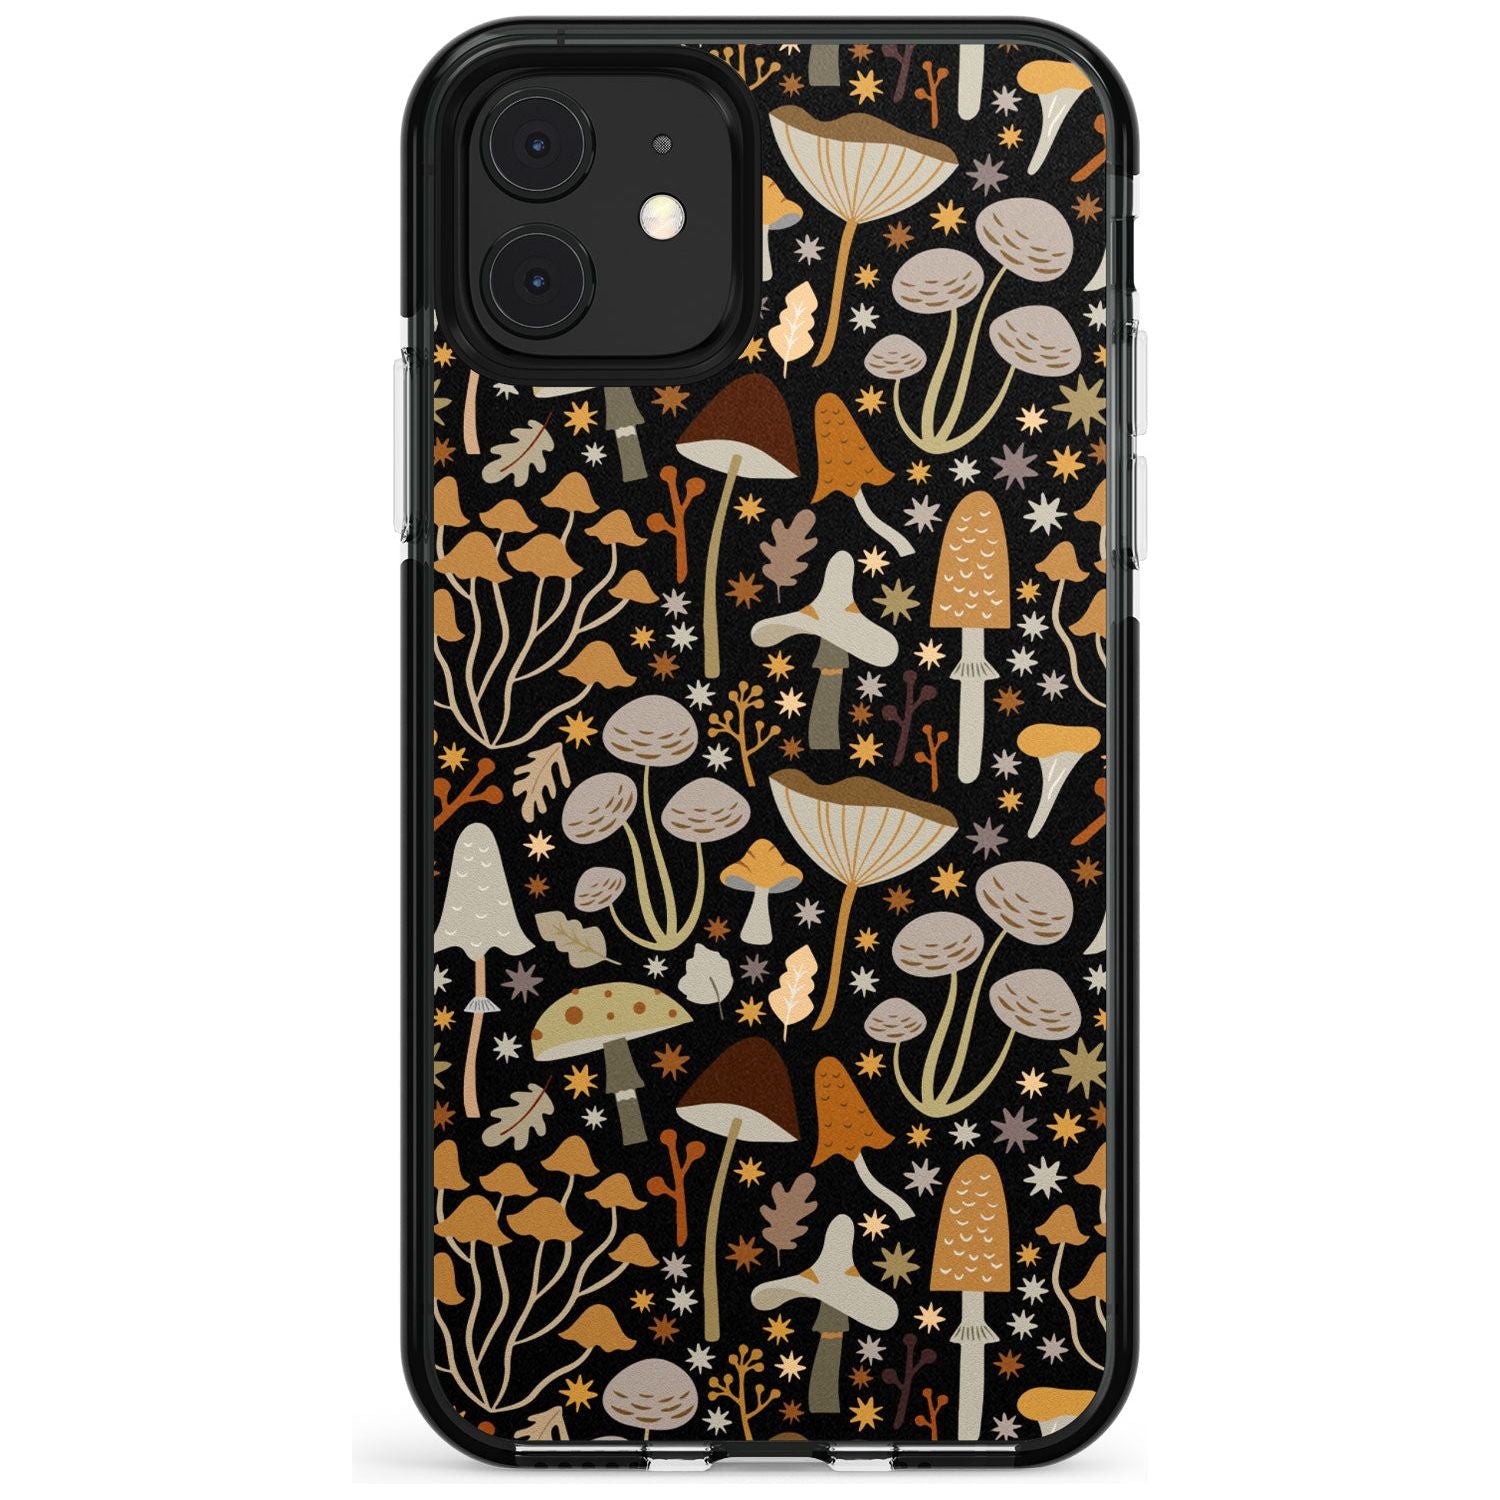 Sentimental Mushrooms Pattern Black Impact Phone Case for iPhone 11 Pro Max